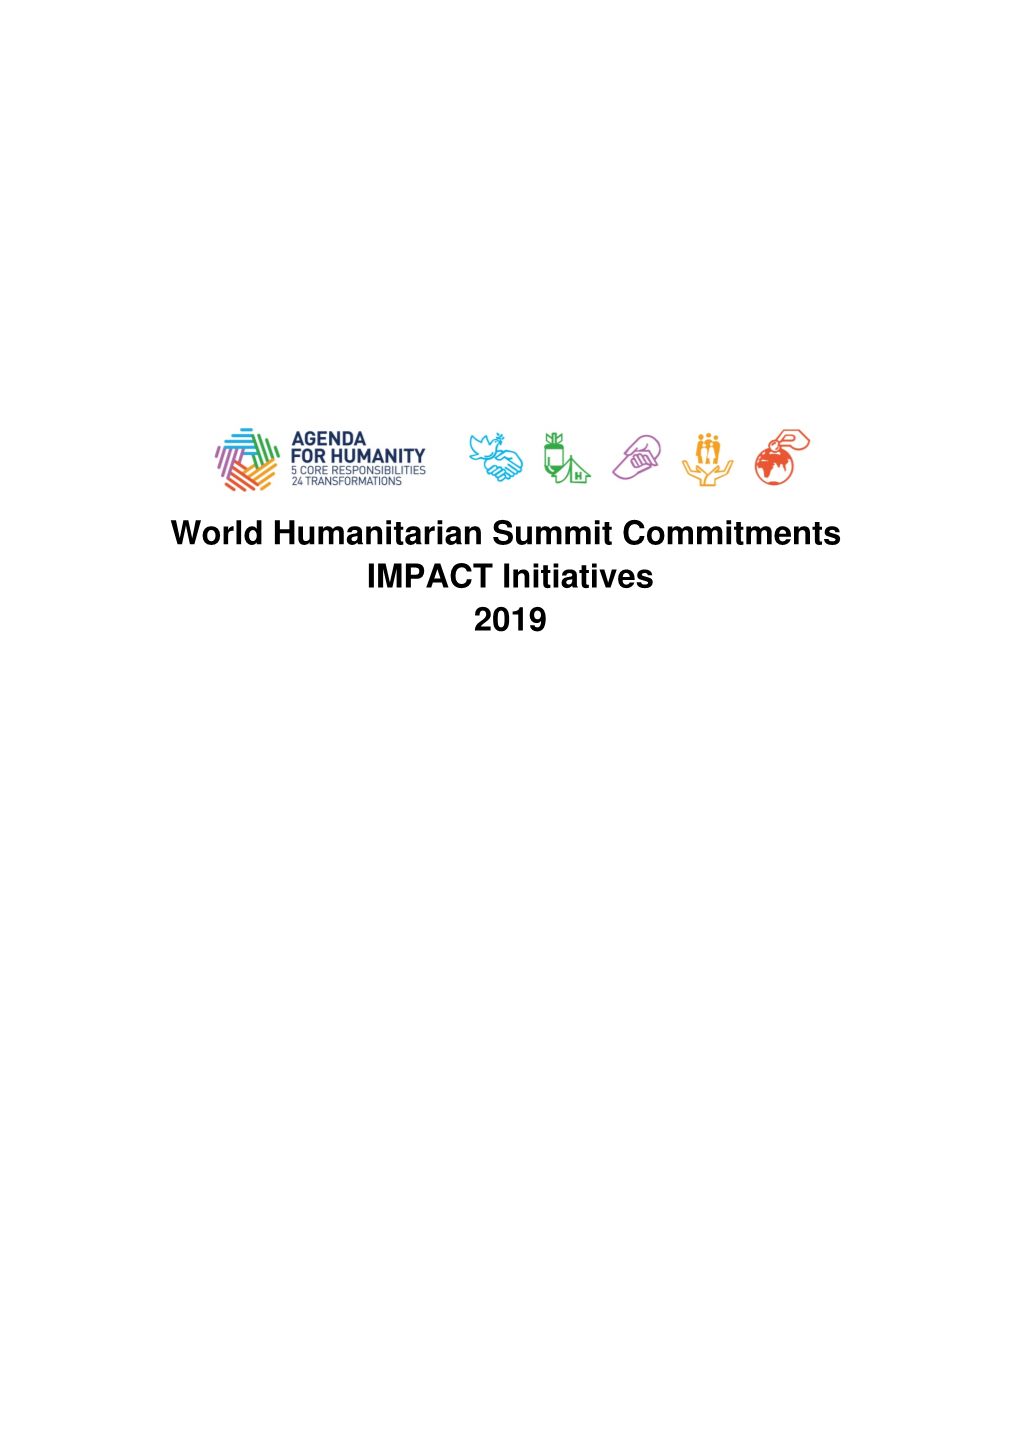 World Humanitarian Summit Commitments IMPACT Initiatives 2019 Individual Commitments